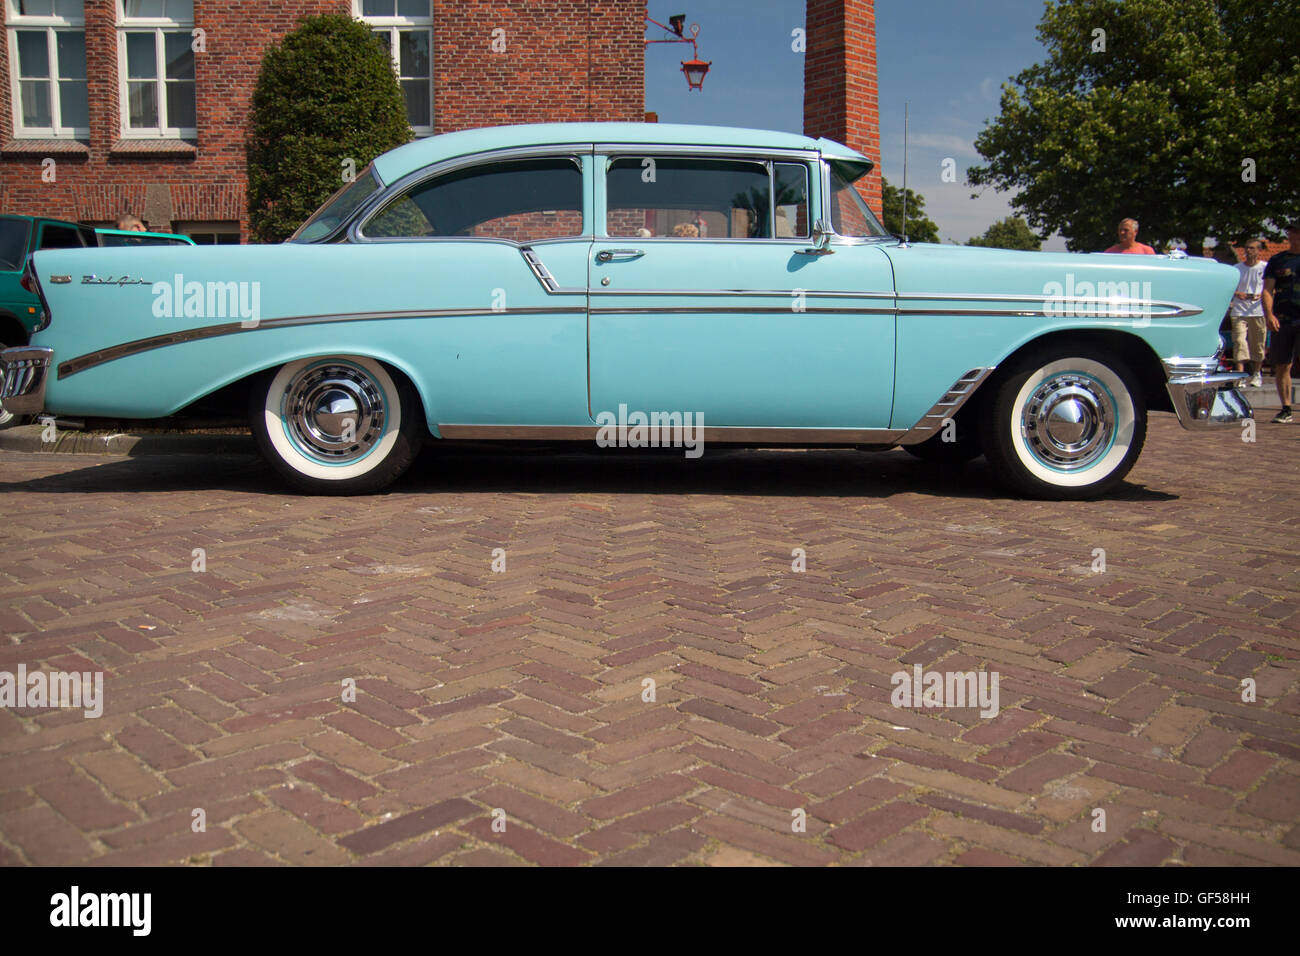 MEDEMBLIK, THE NETHERLANDS - JULY 27,2014: view of a light blue Chevrolet bel air 1956 on a oldtimer show Stock Photo